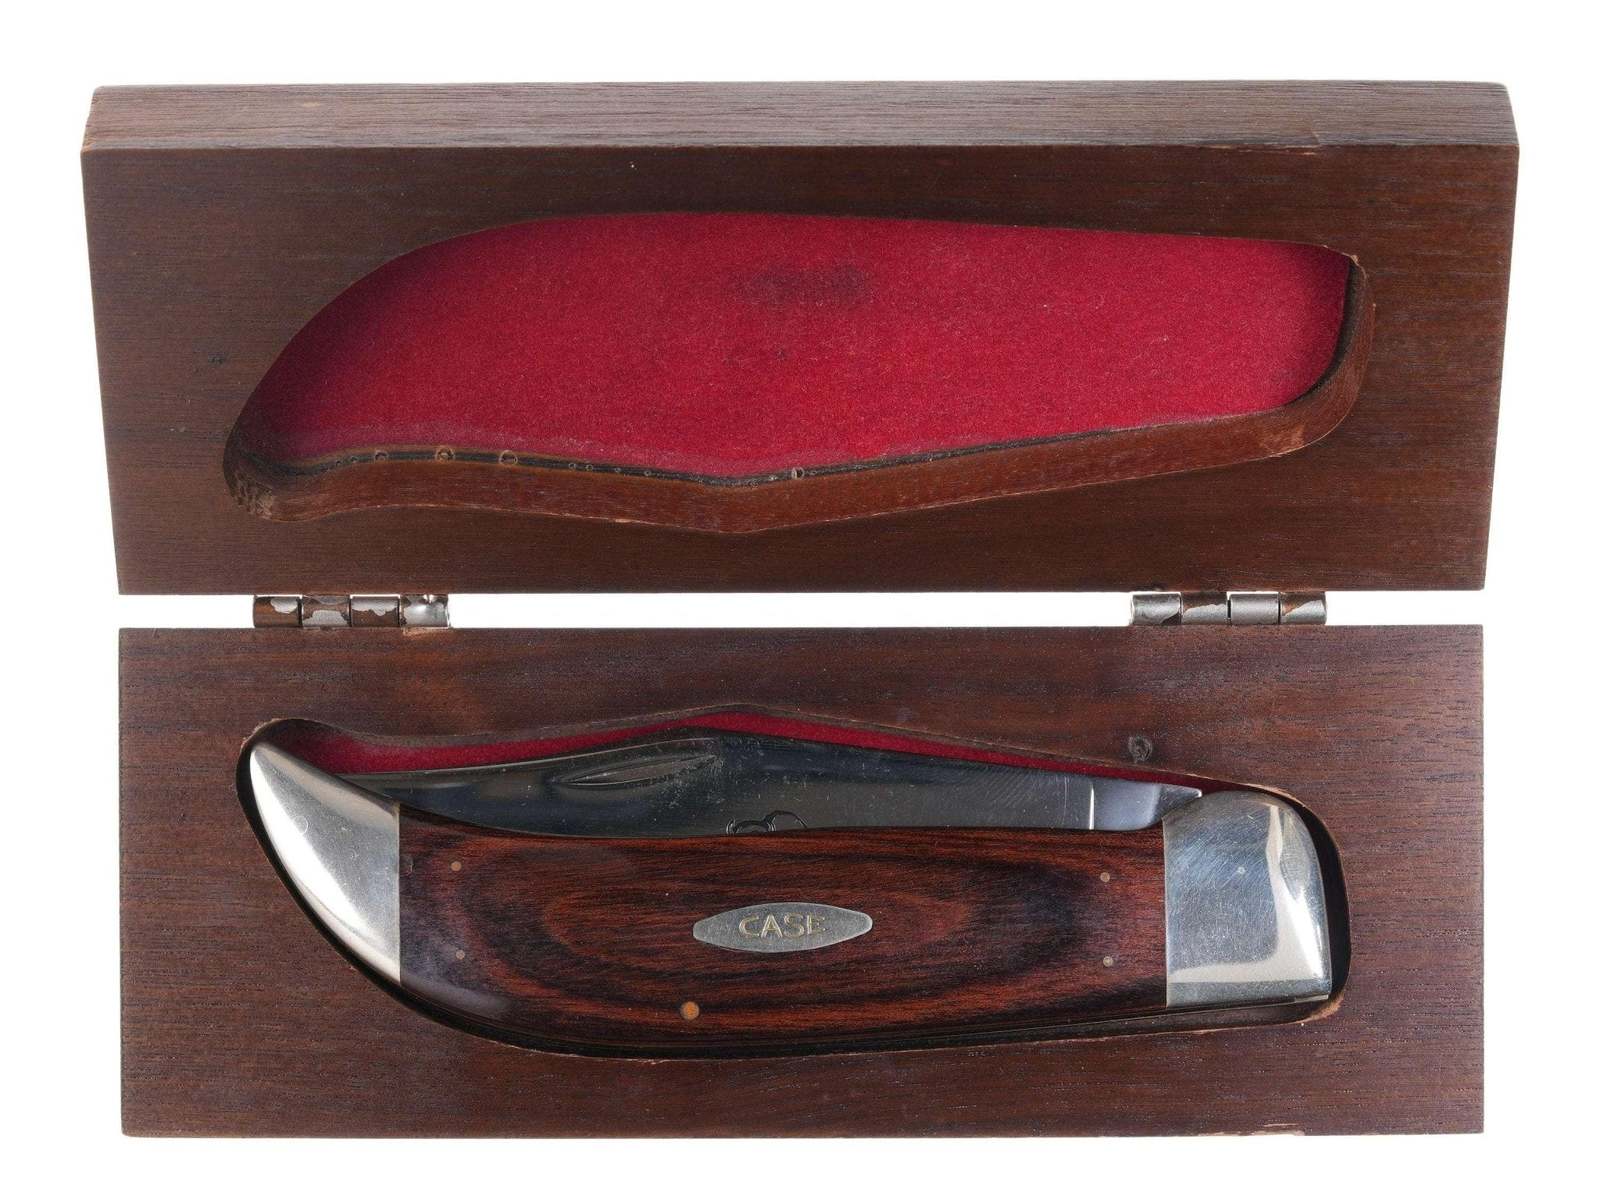 Large 1970's Case Buffalo knife in wood presentation box - $341.55